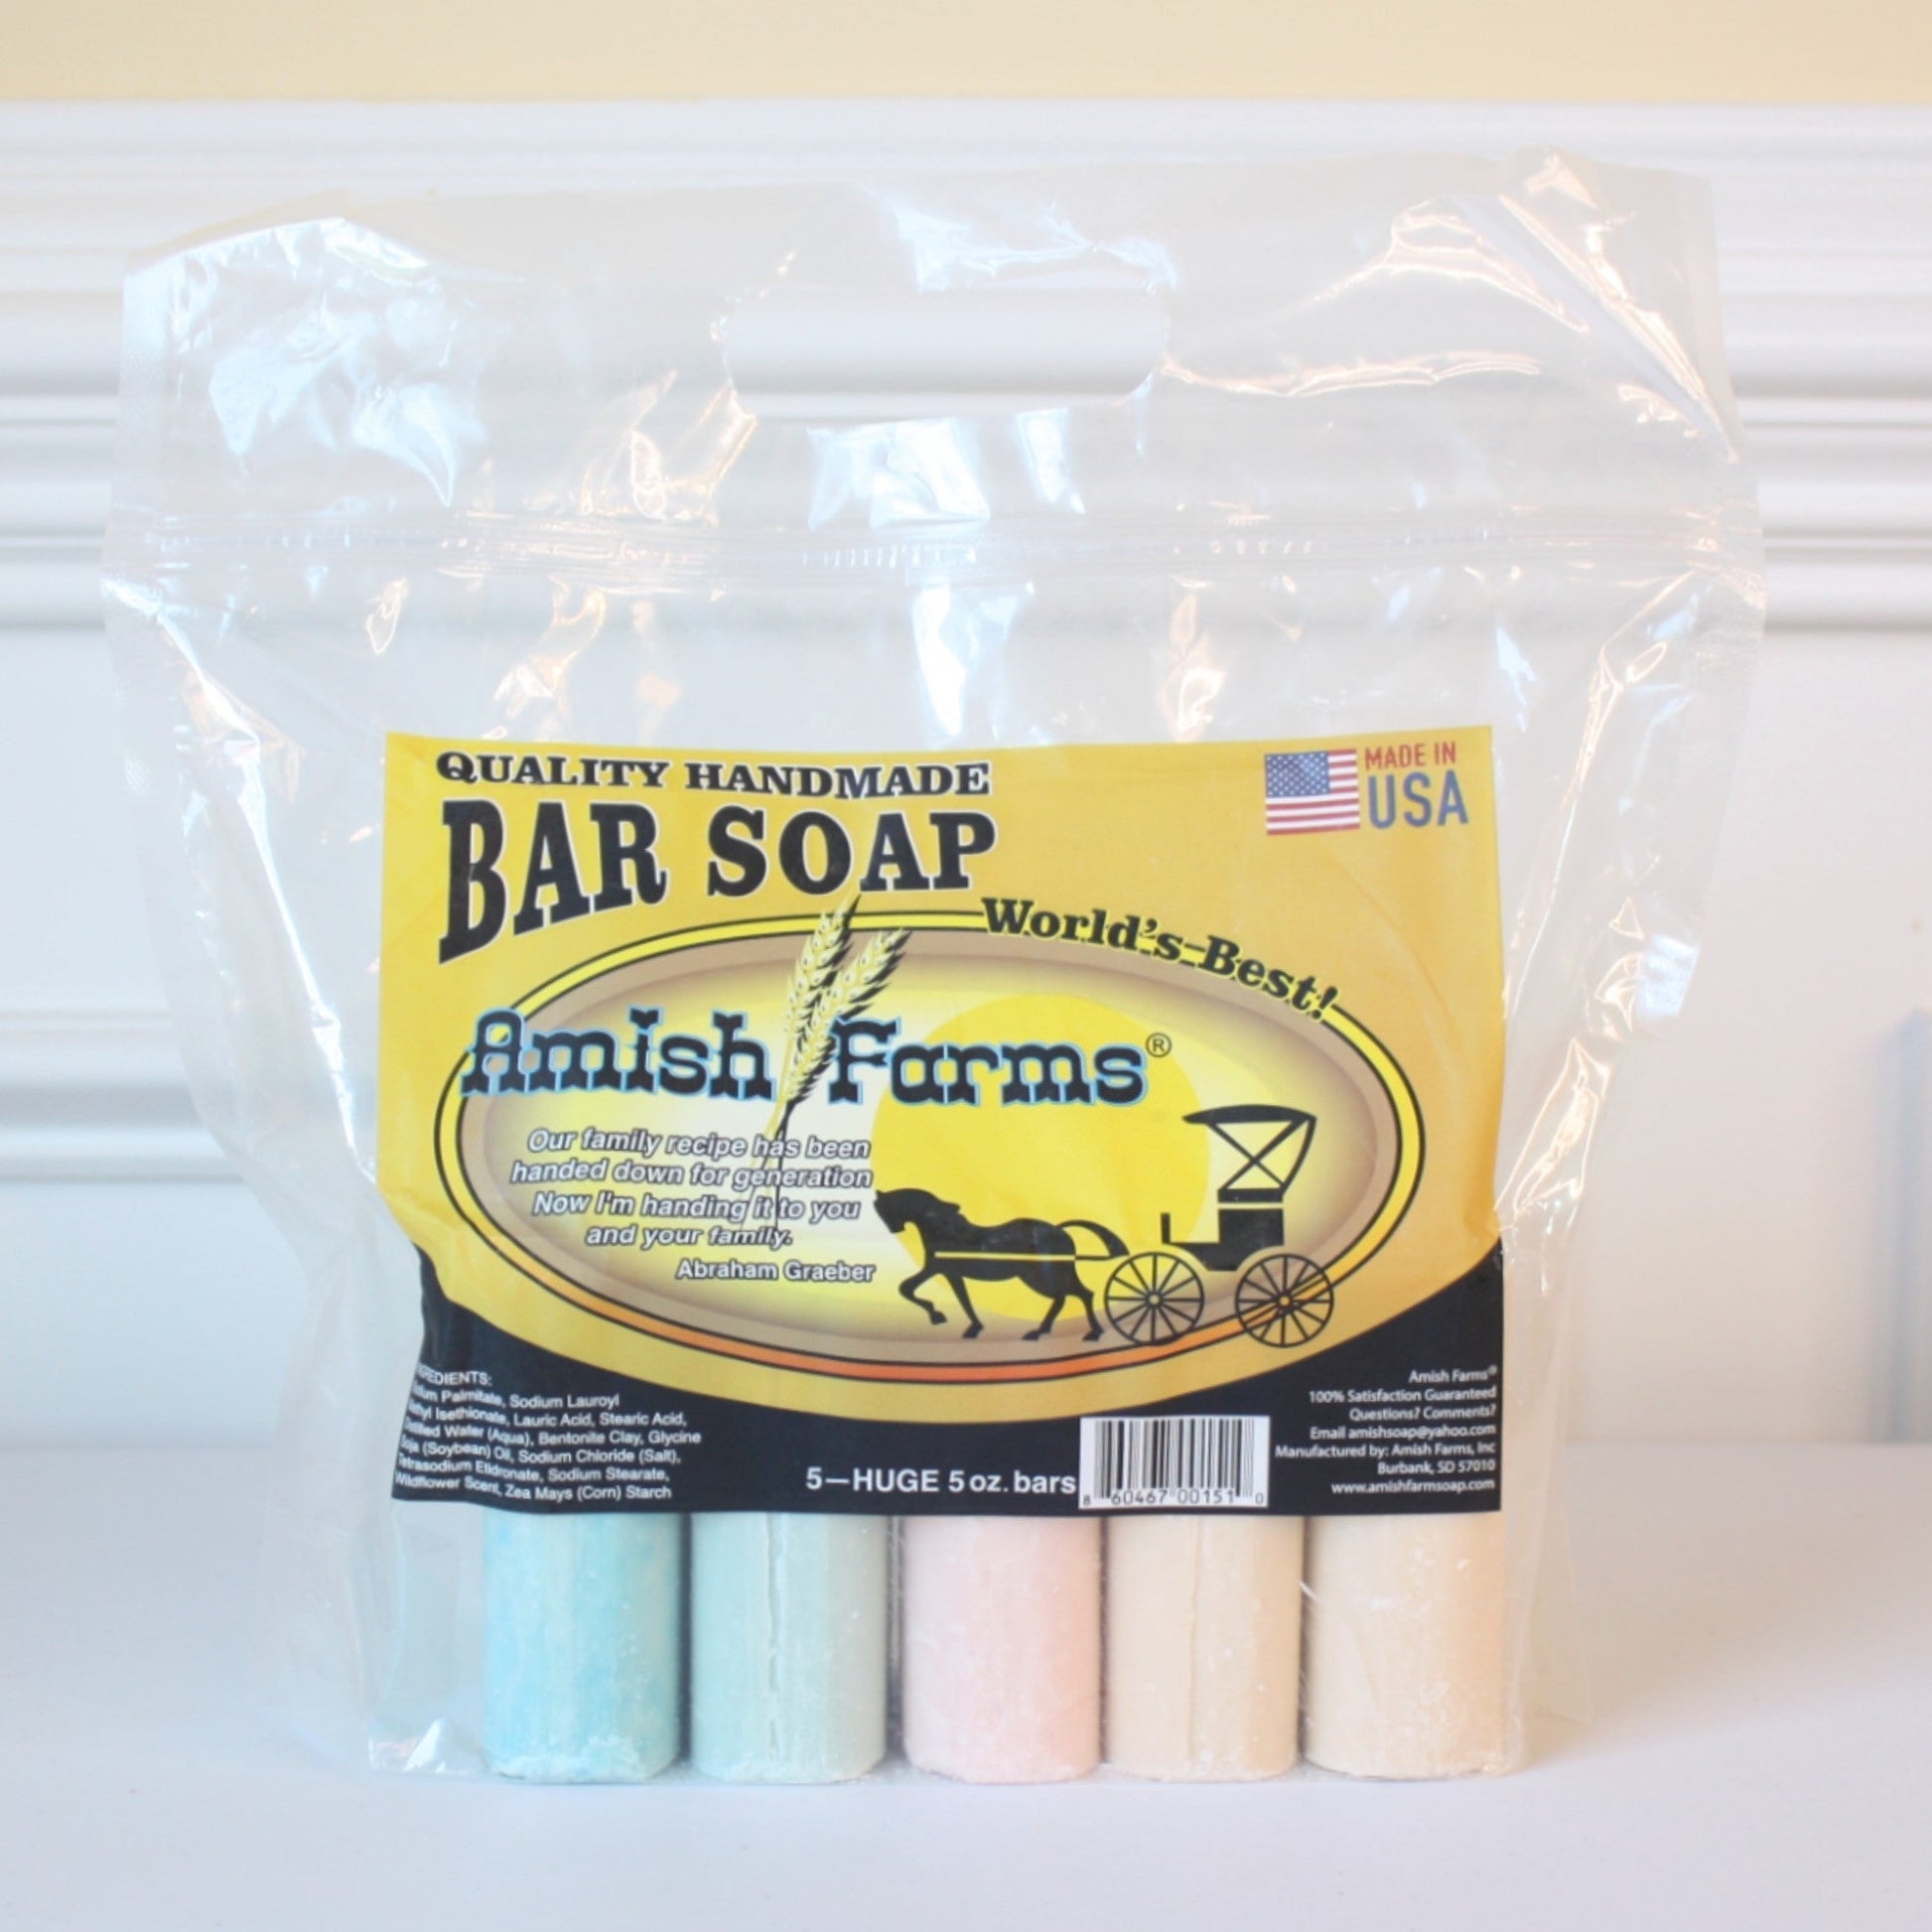 Amish Farms Soap 5 Bar Bag - Random Colors - Handmade in the USA